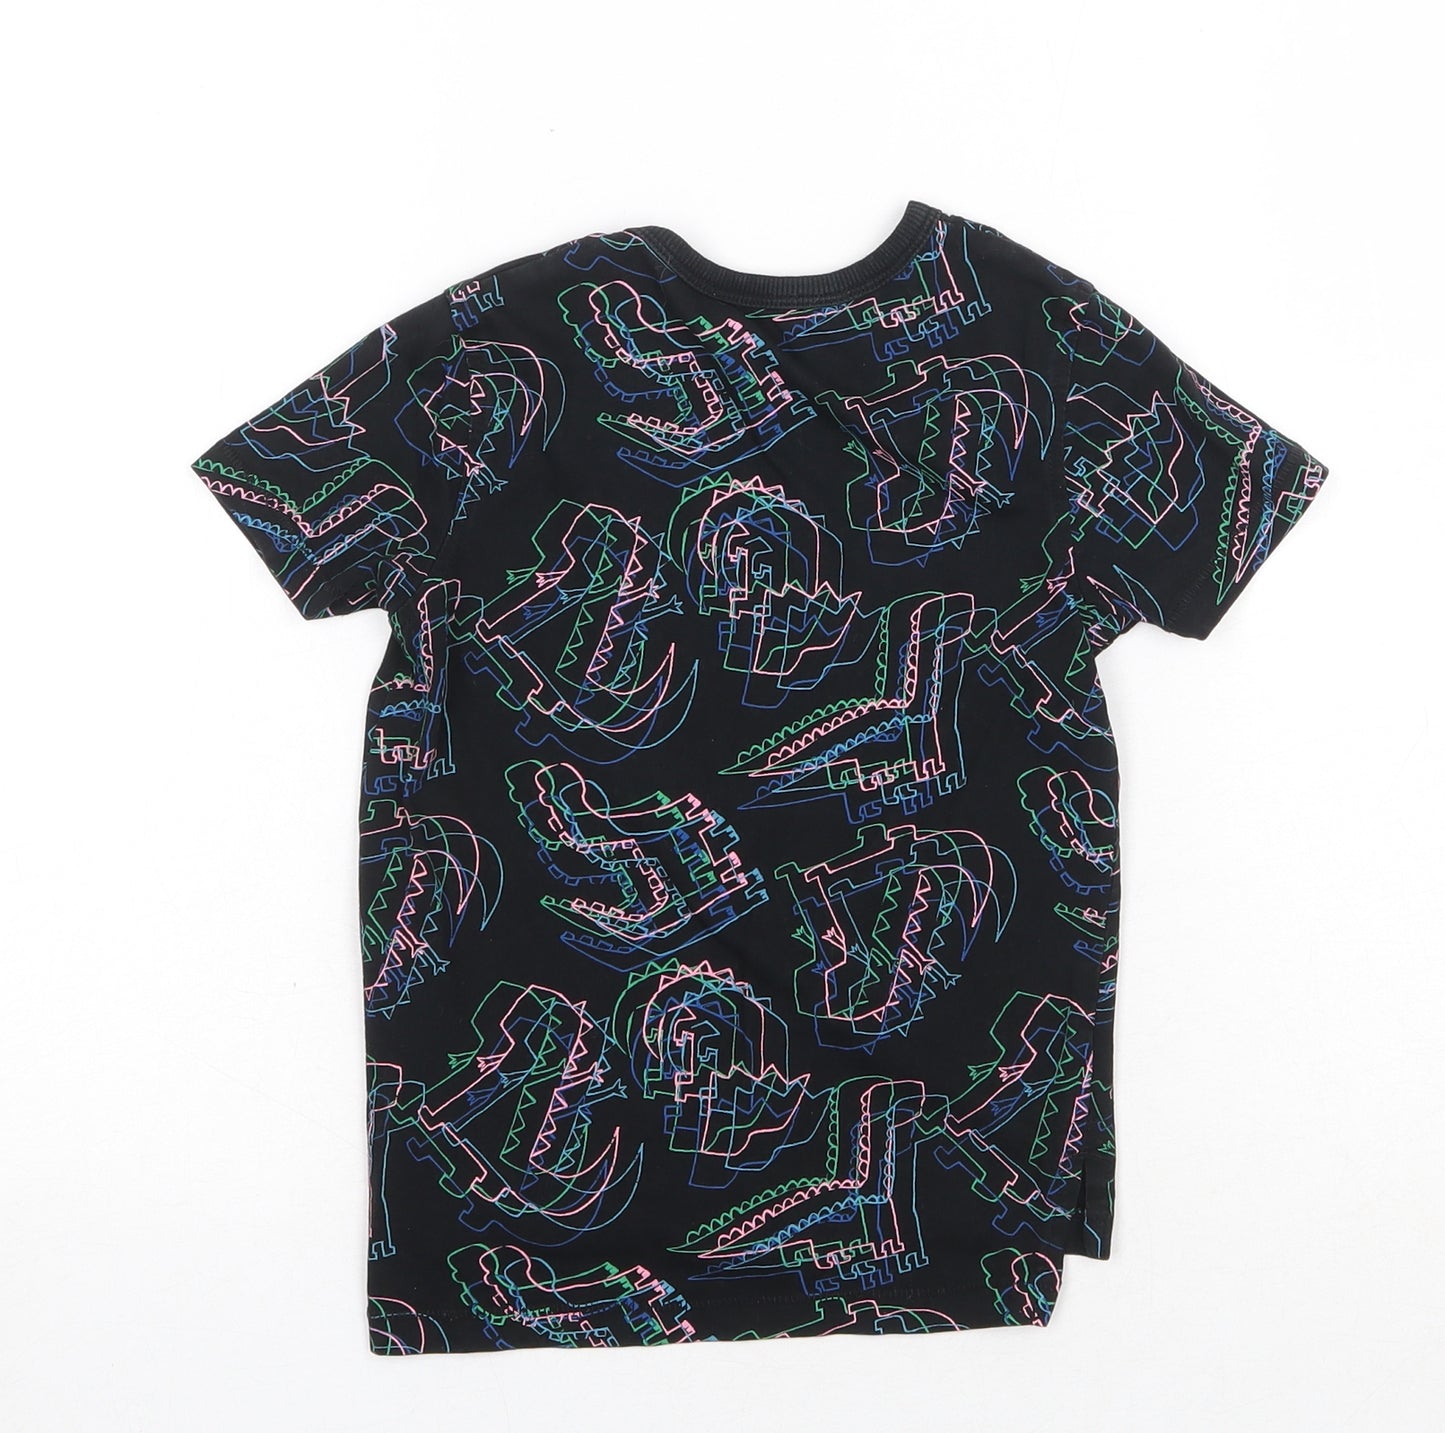 George Girls Black Geometric 100% Cotton Basic T-Shirt Size 3-4 Years Round Neck Pullover